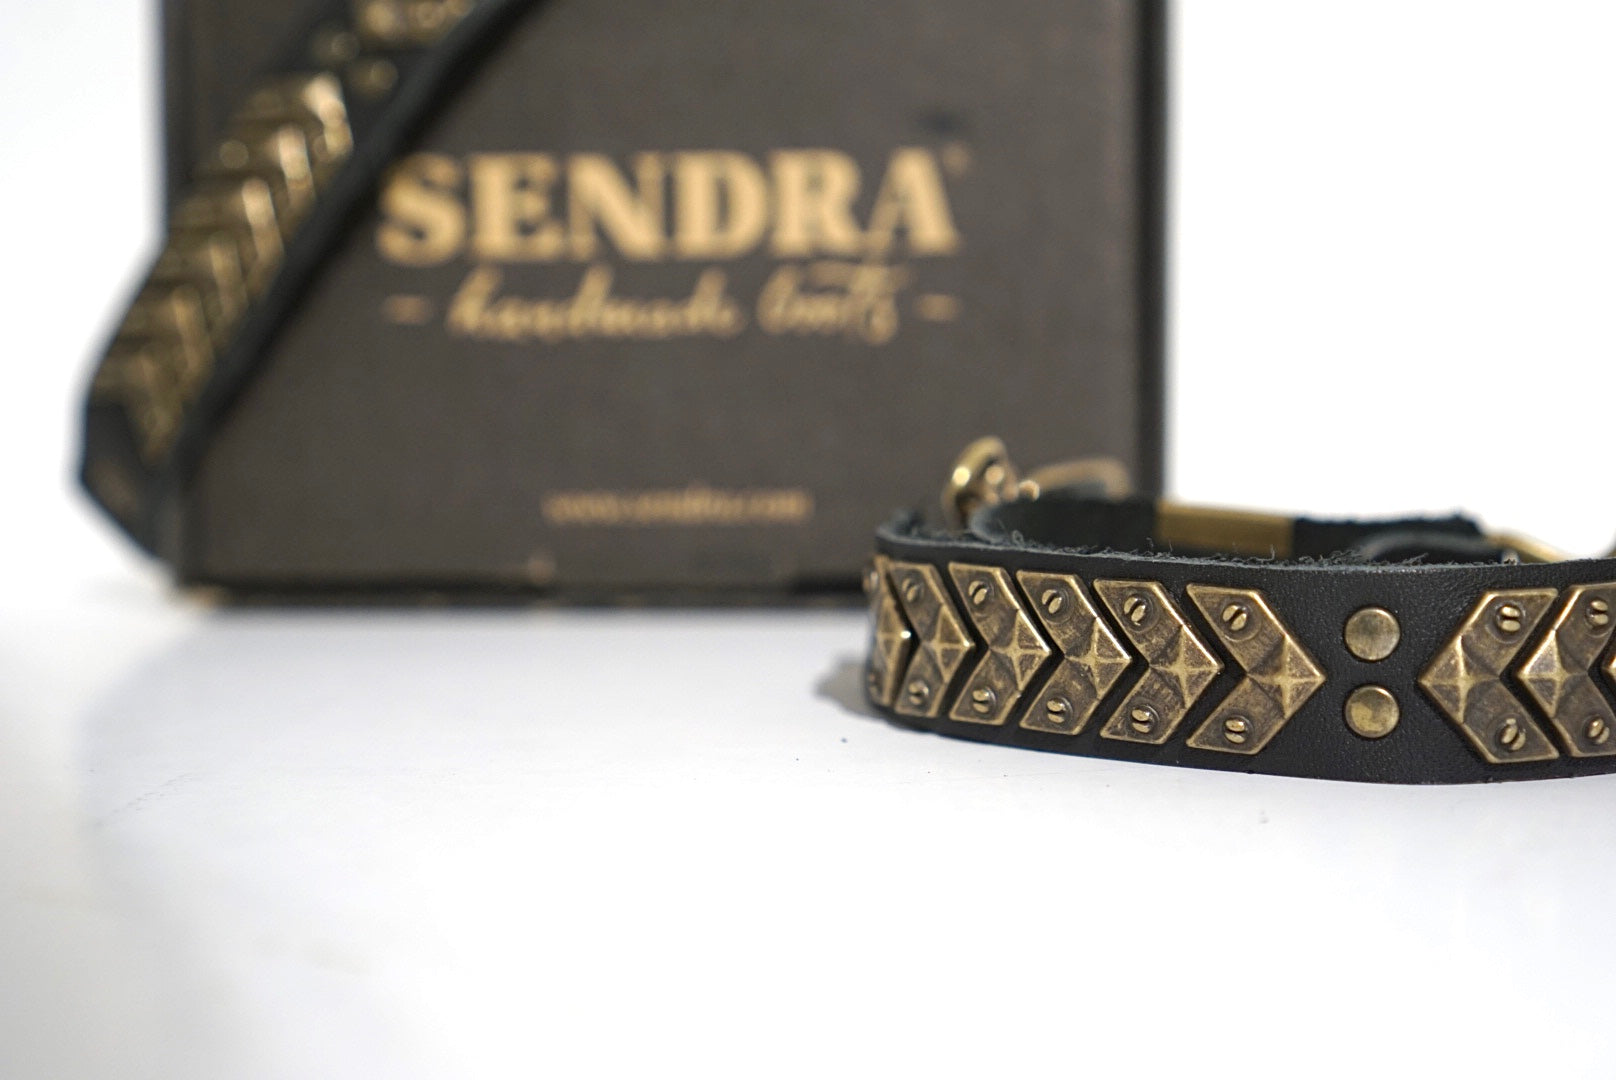 Sendra spores - black with gold-colored arrows